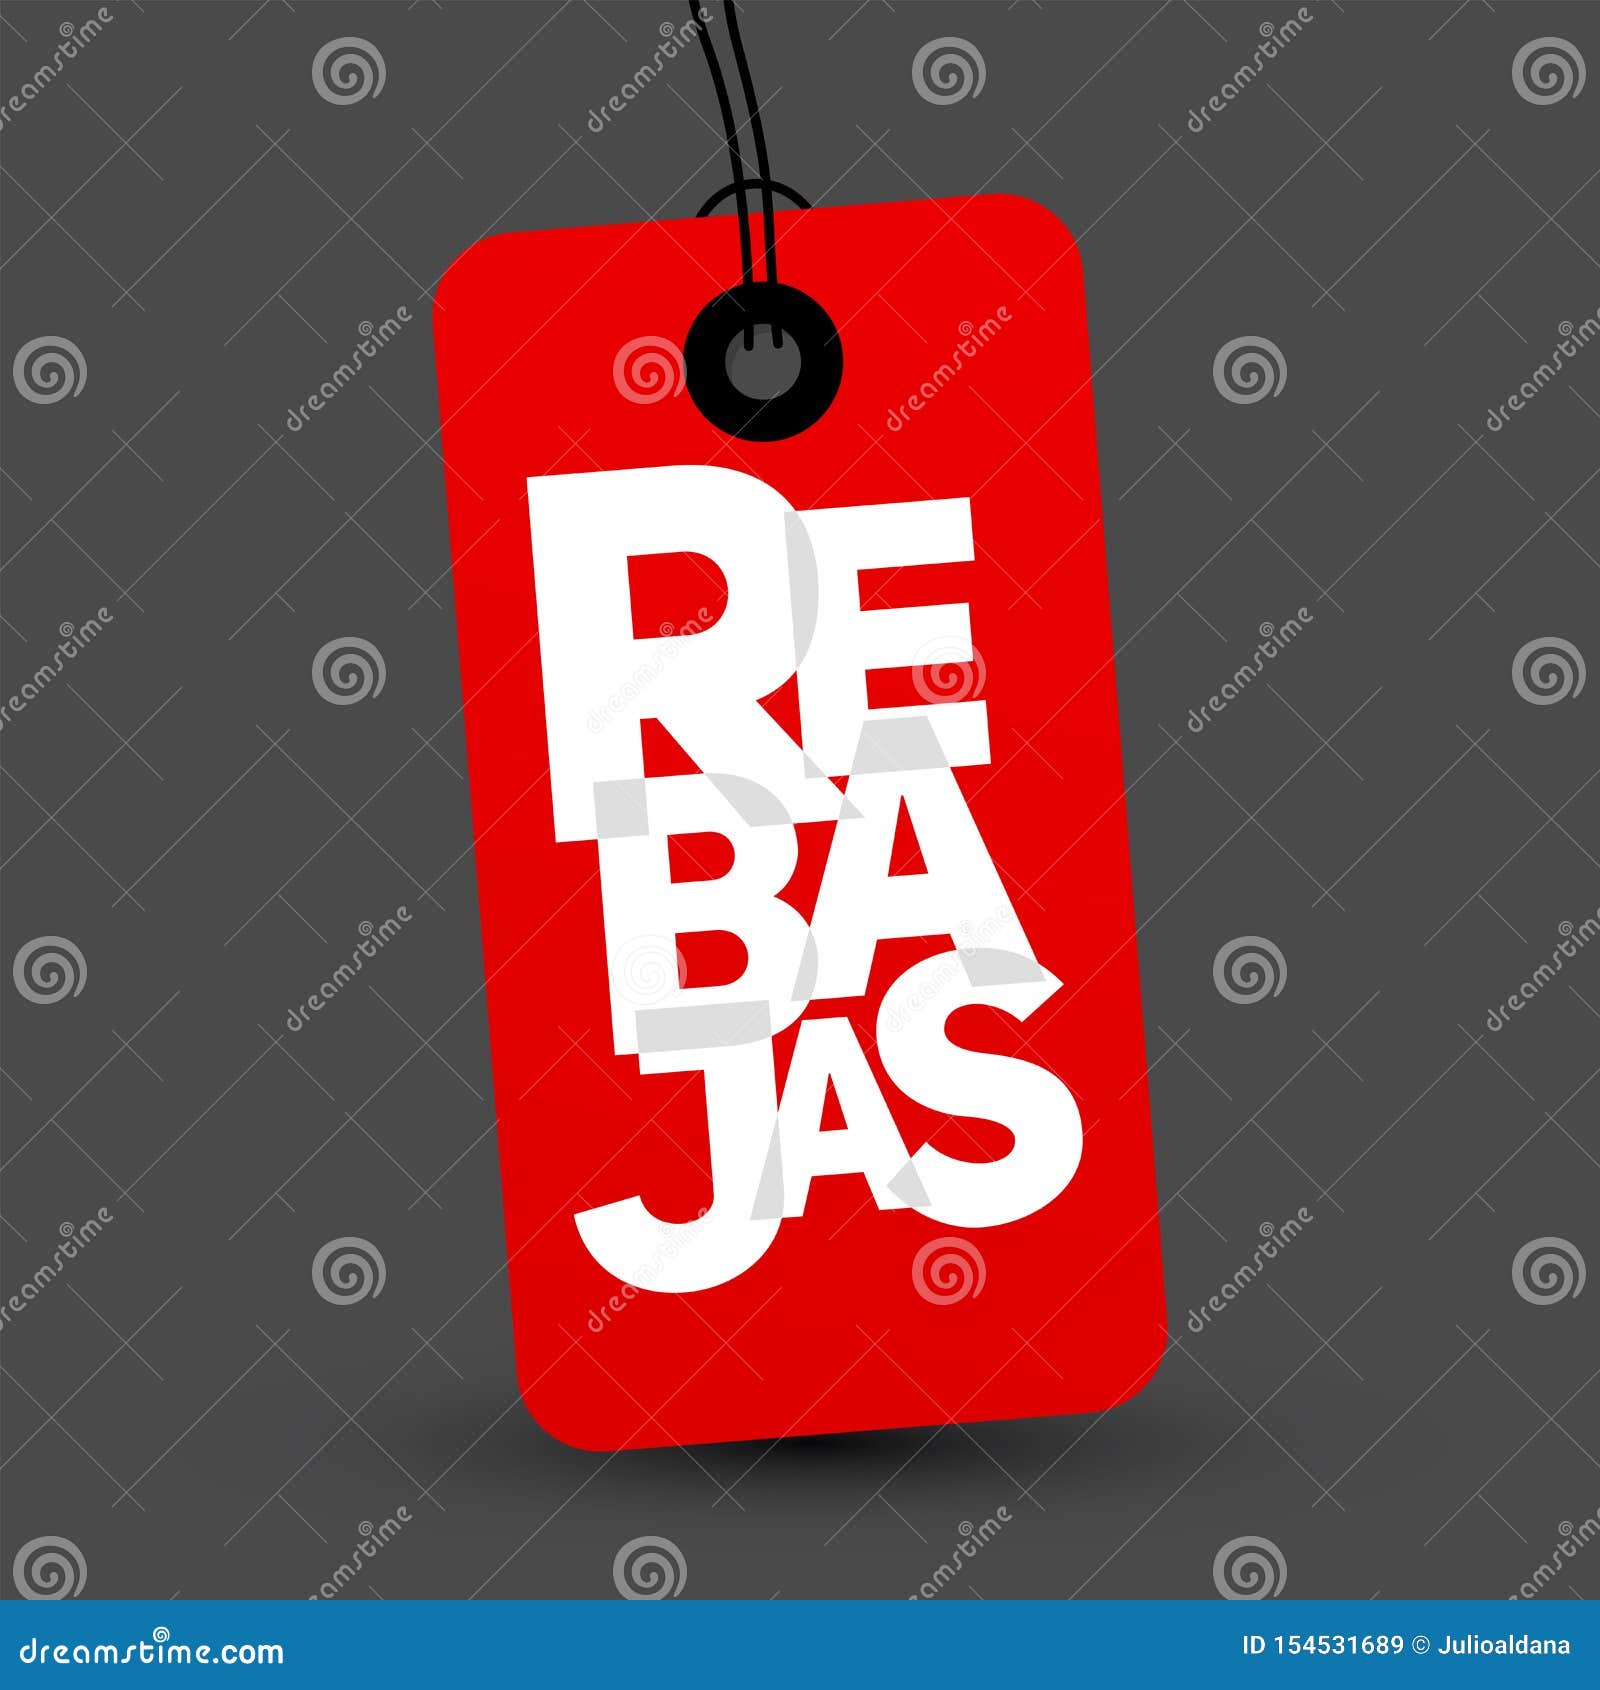 rebajas, discounts spanish text, sale  label emblem.